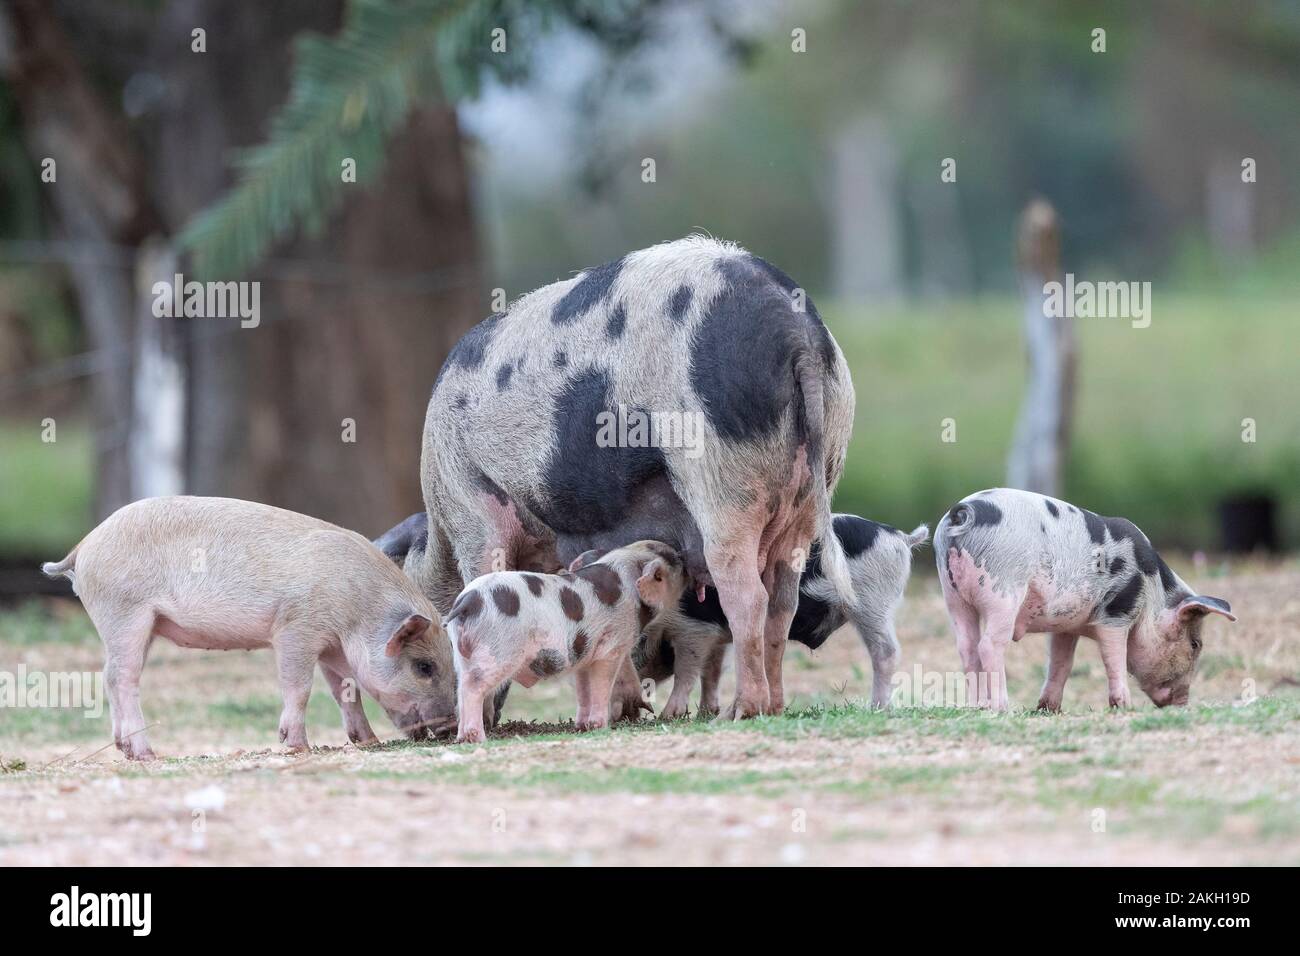 Brazil, Mato Grosso, Pantanal area, Domestic Pig Stock Photo